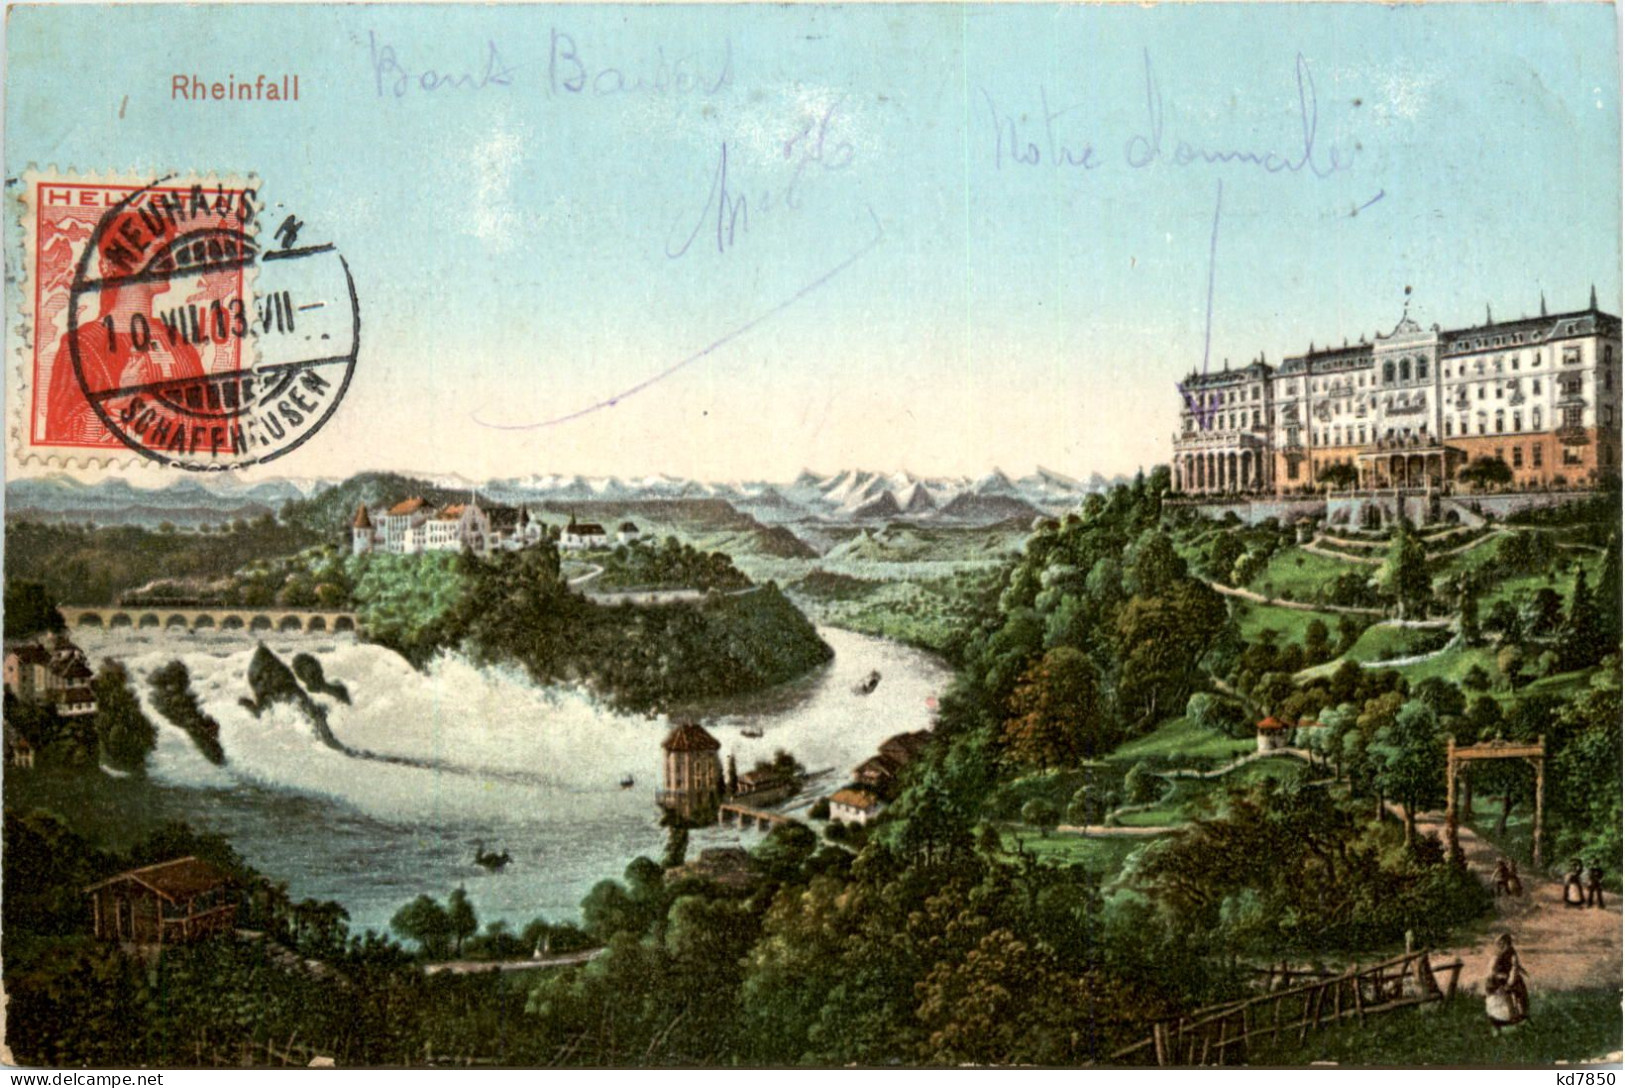 Schaffhausen - Rheinfall - Neuhausen Am Rheinfall